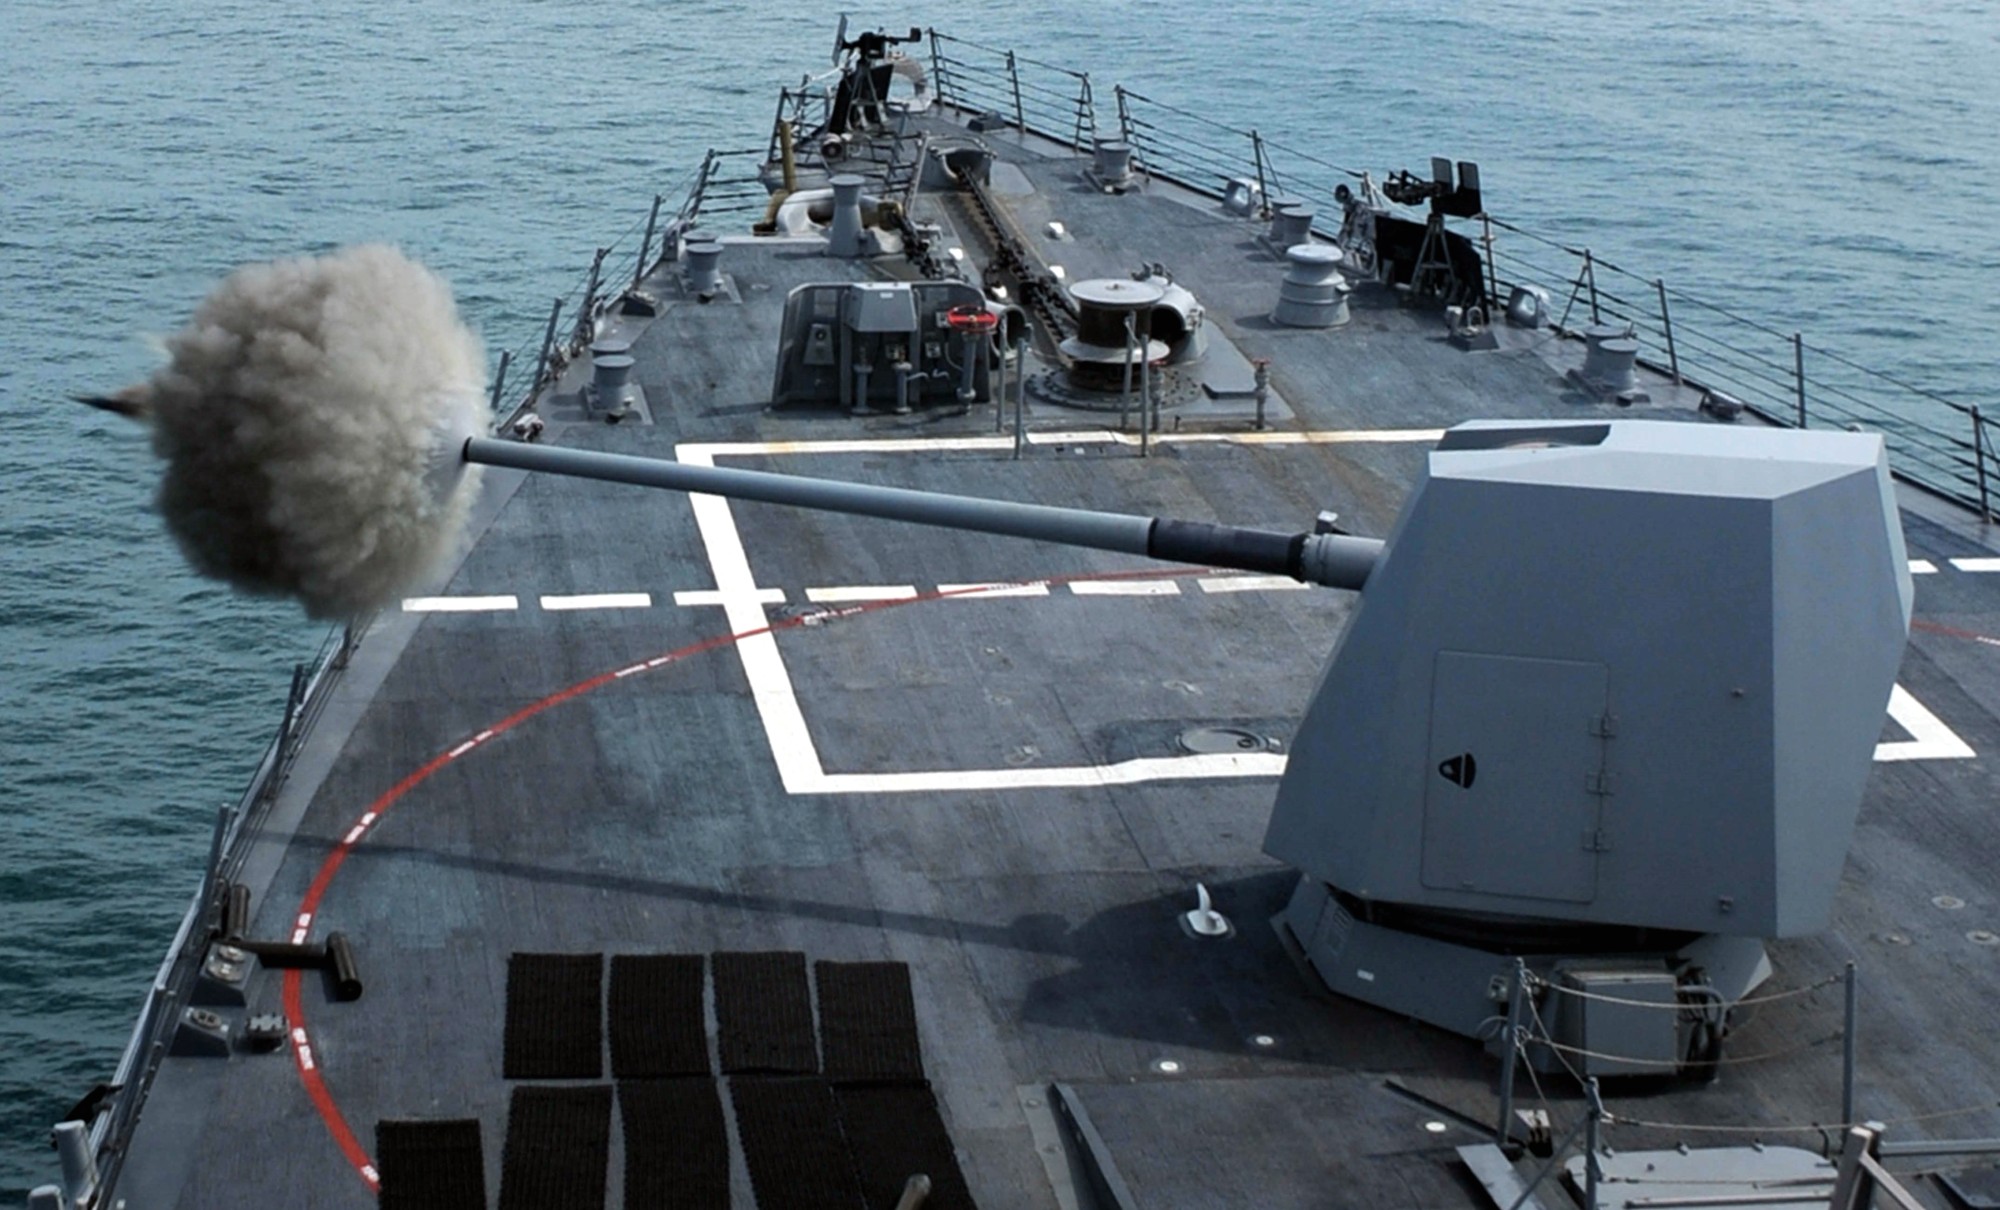 ddg-109 uss jason dunham arleigh burke class guided missile destroyer aegis us navy mk.45 gun 55